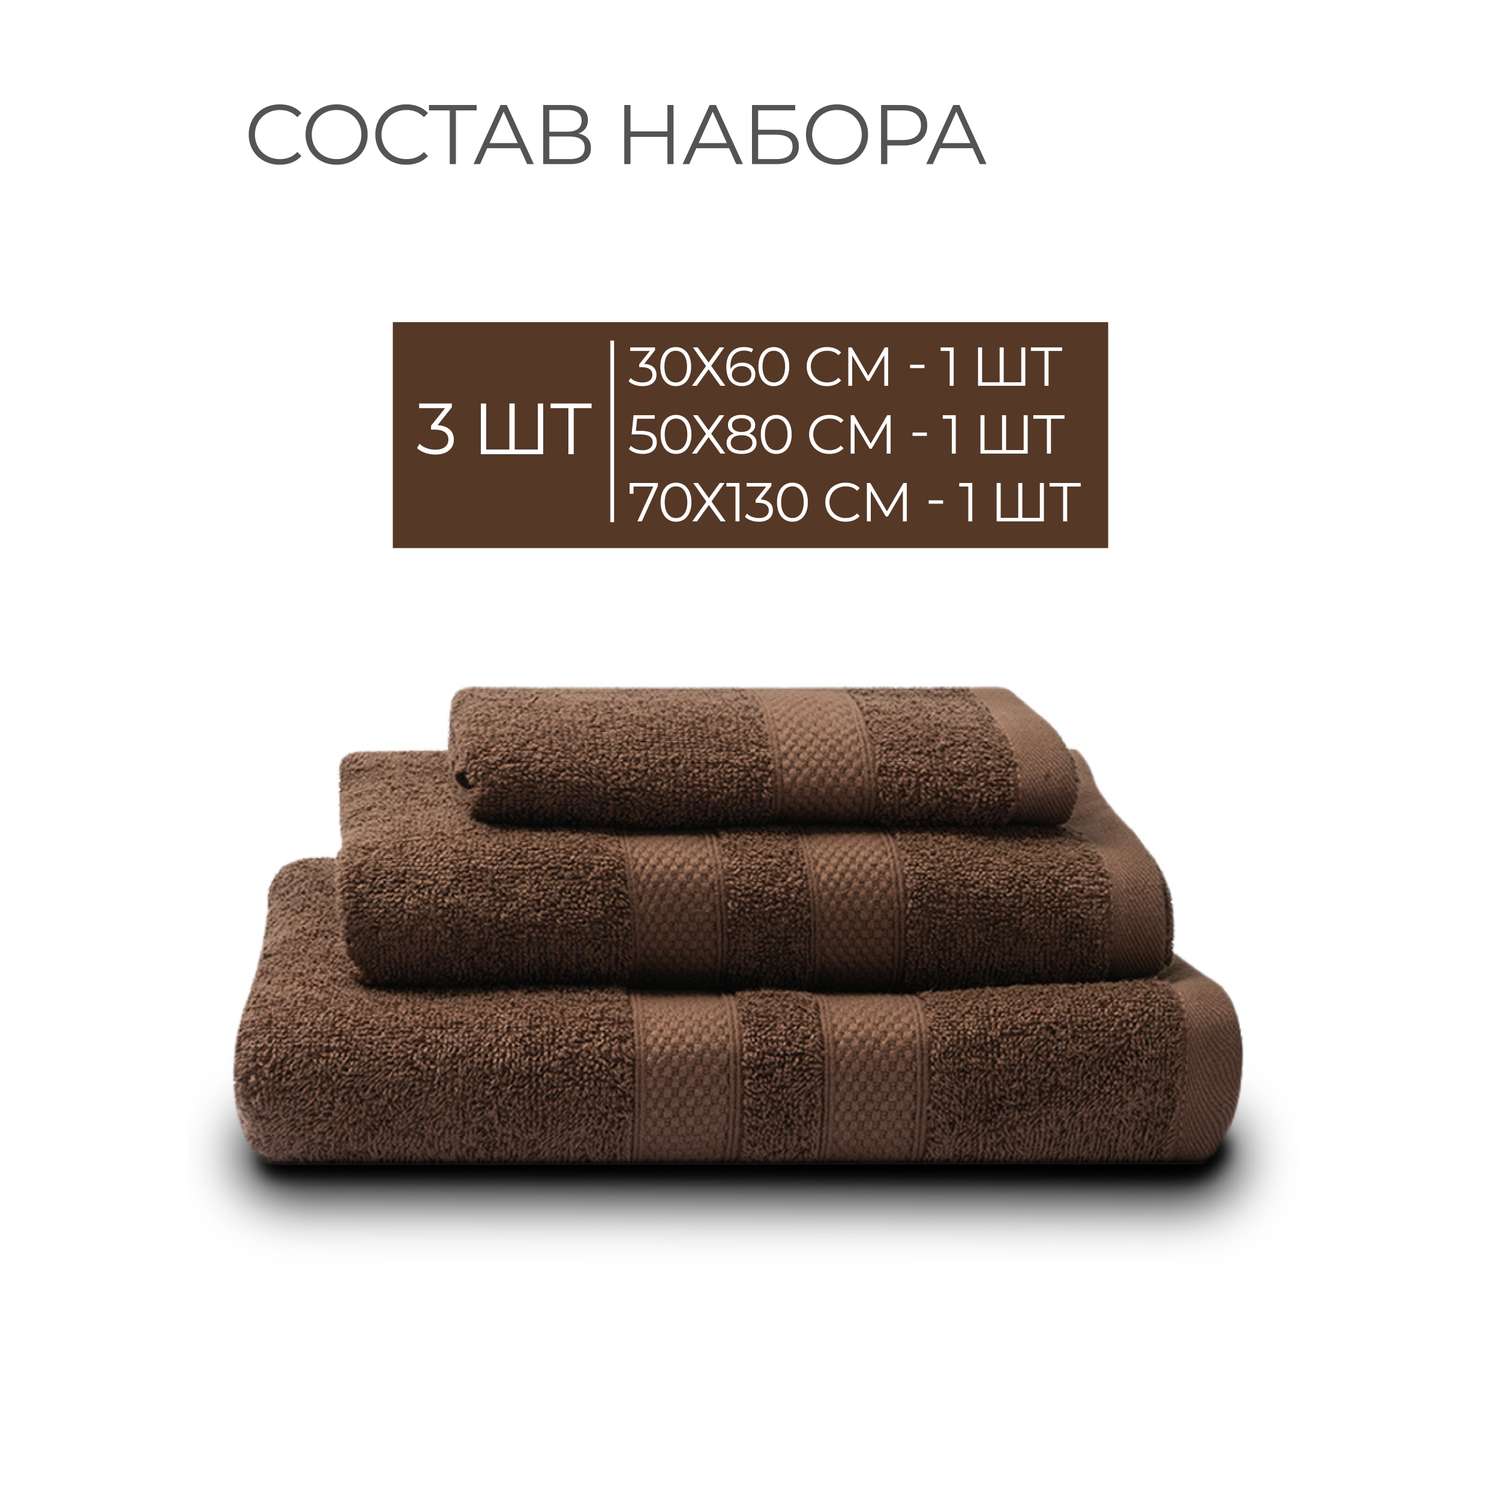 Набор махровых полотенец Unifico Nature шоколад набор из 3 шт.:30х60-1. 50х80-1. 70х130-1 - фото 4